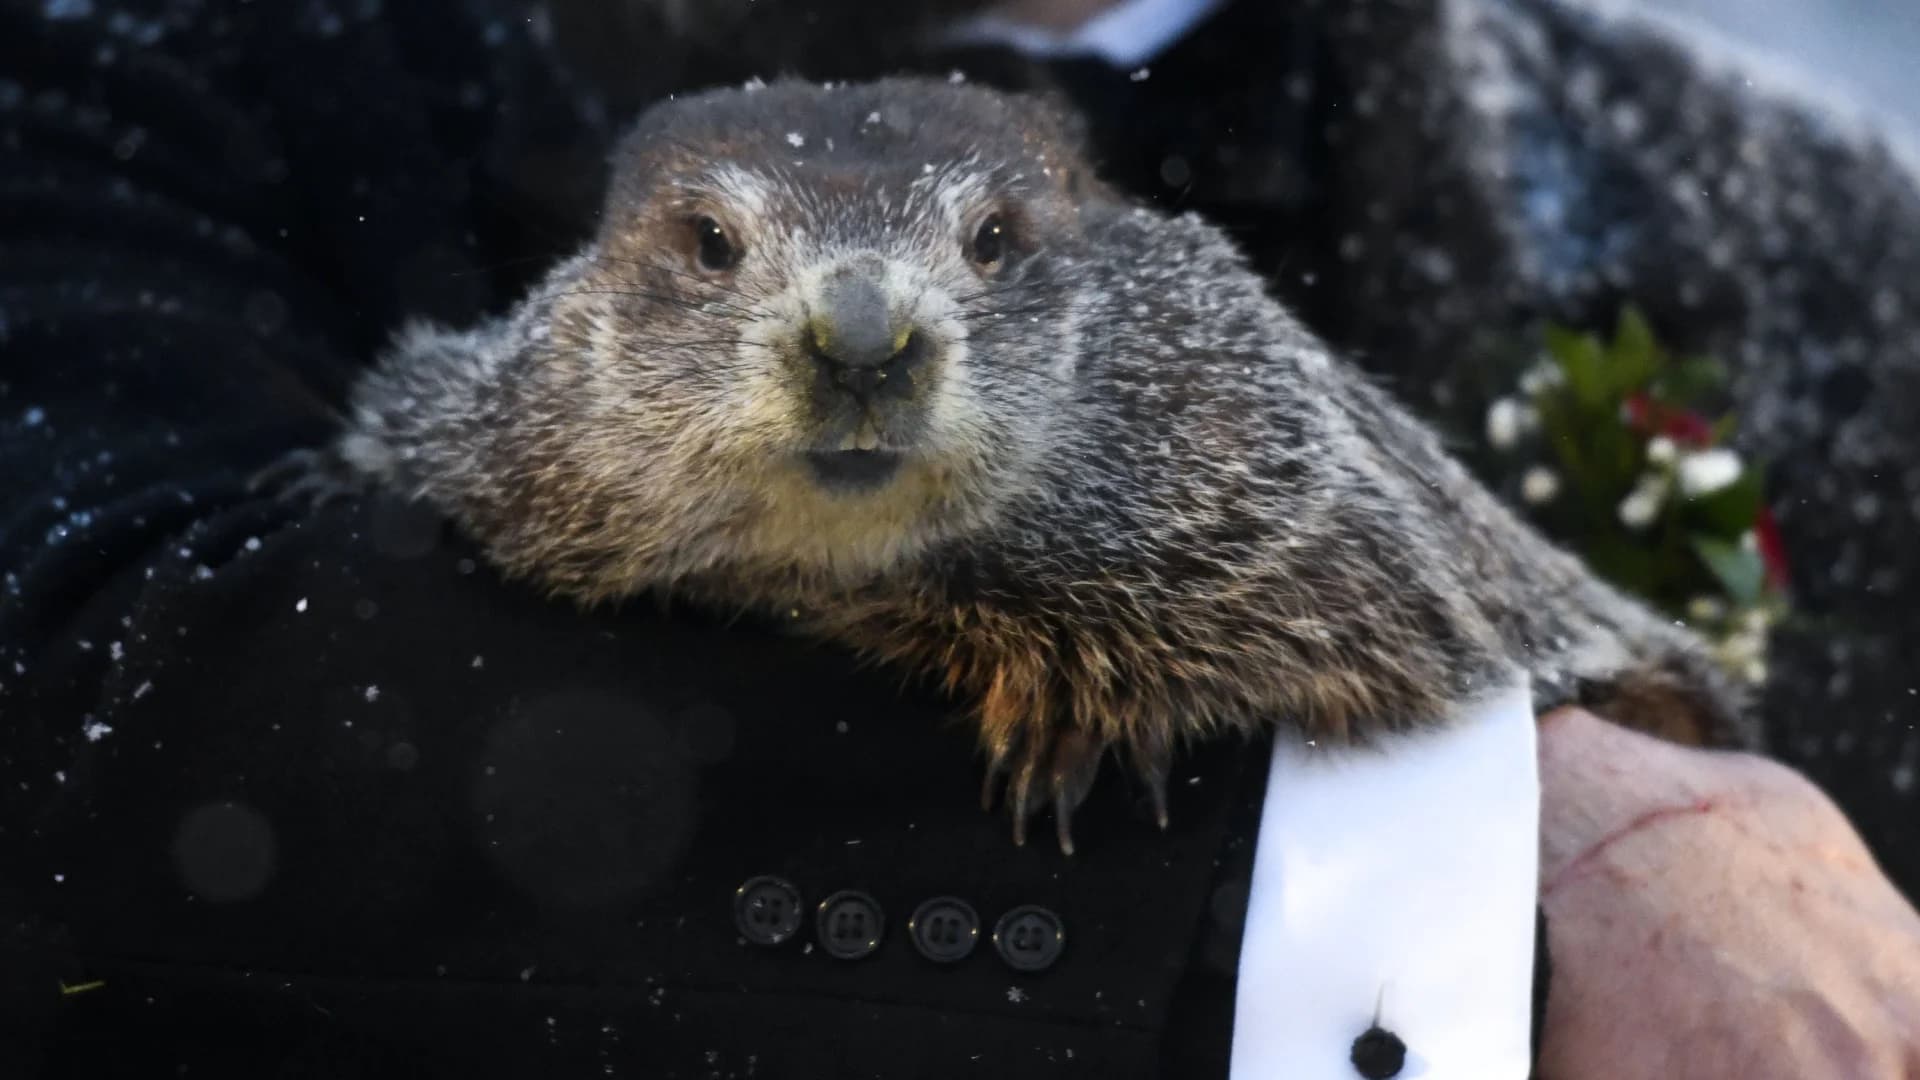 Punxsutawney Phil makes his Groundhog Day prediction - 6 more weeks of winter